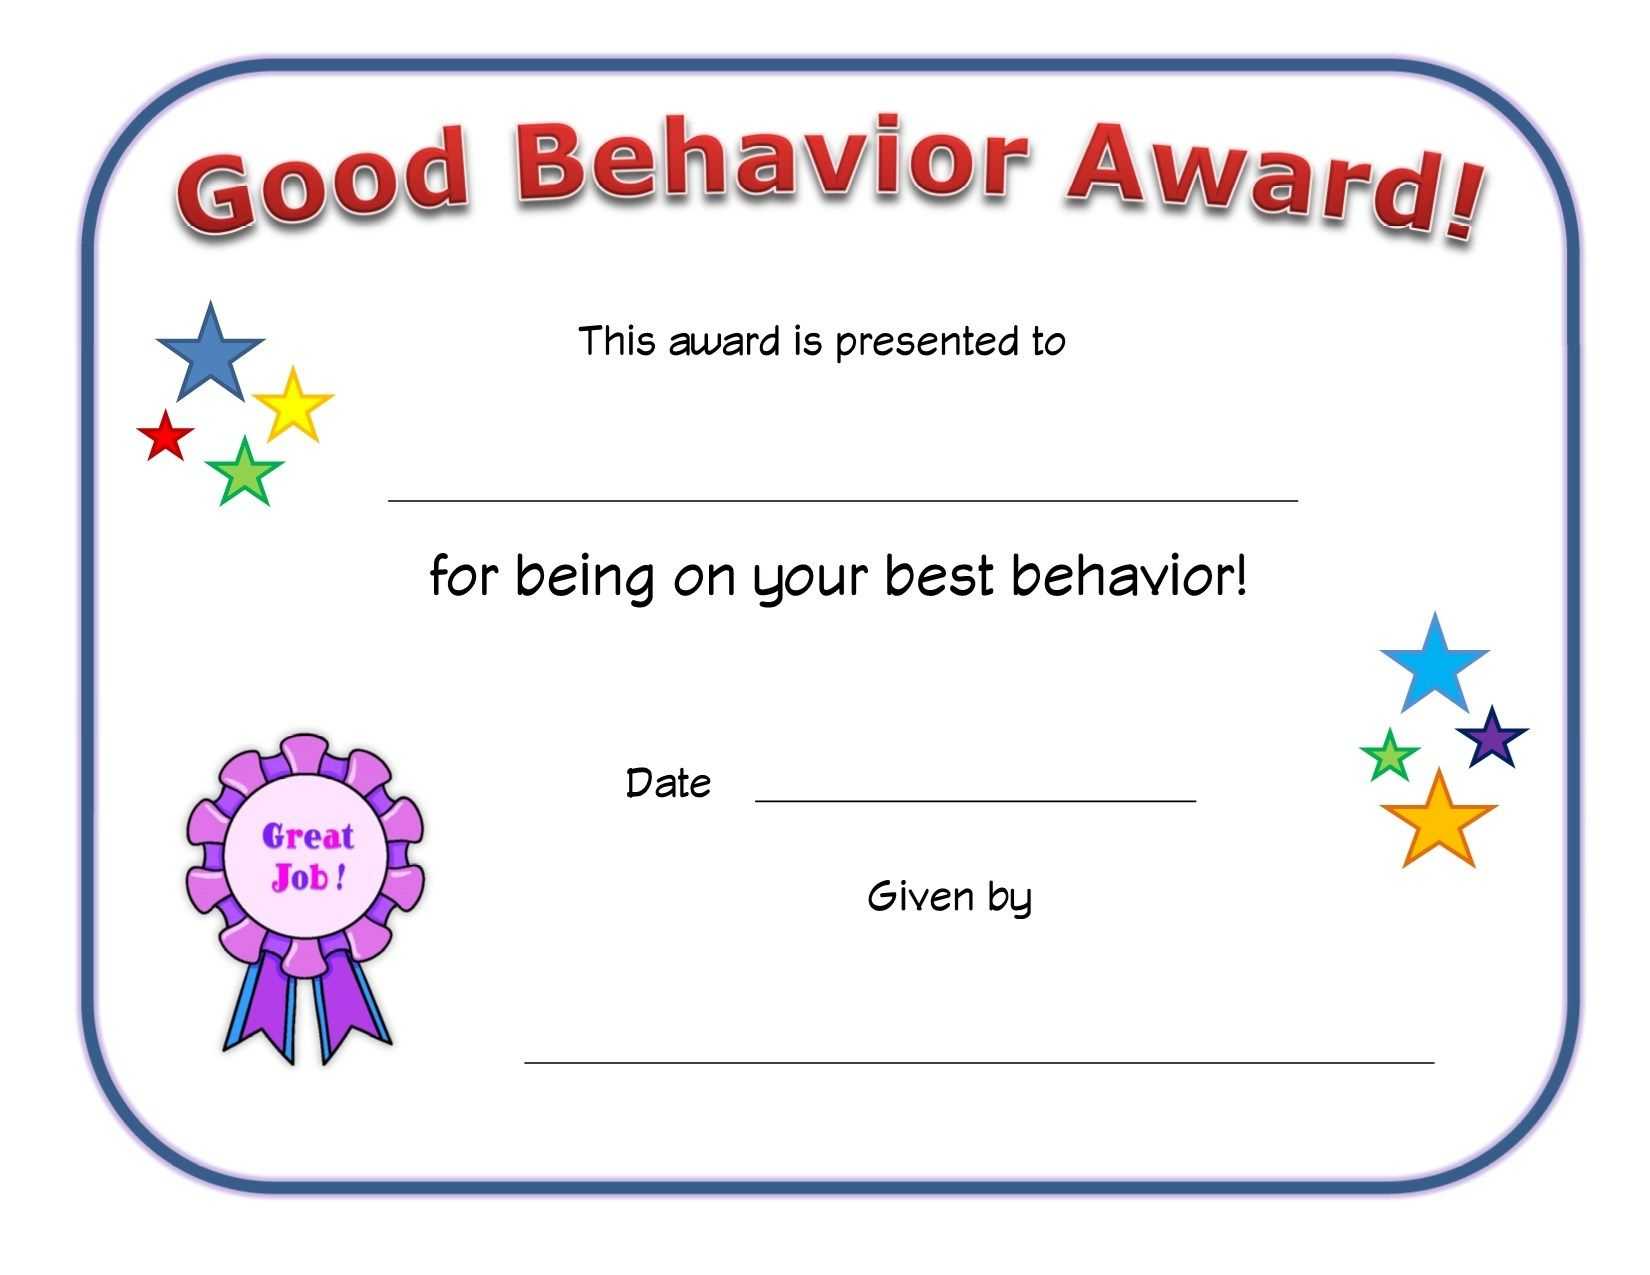 Good Behavior Award Certificate | Classroom | Preschool Within Hayes Certificate Templates